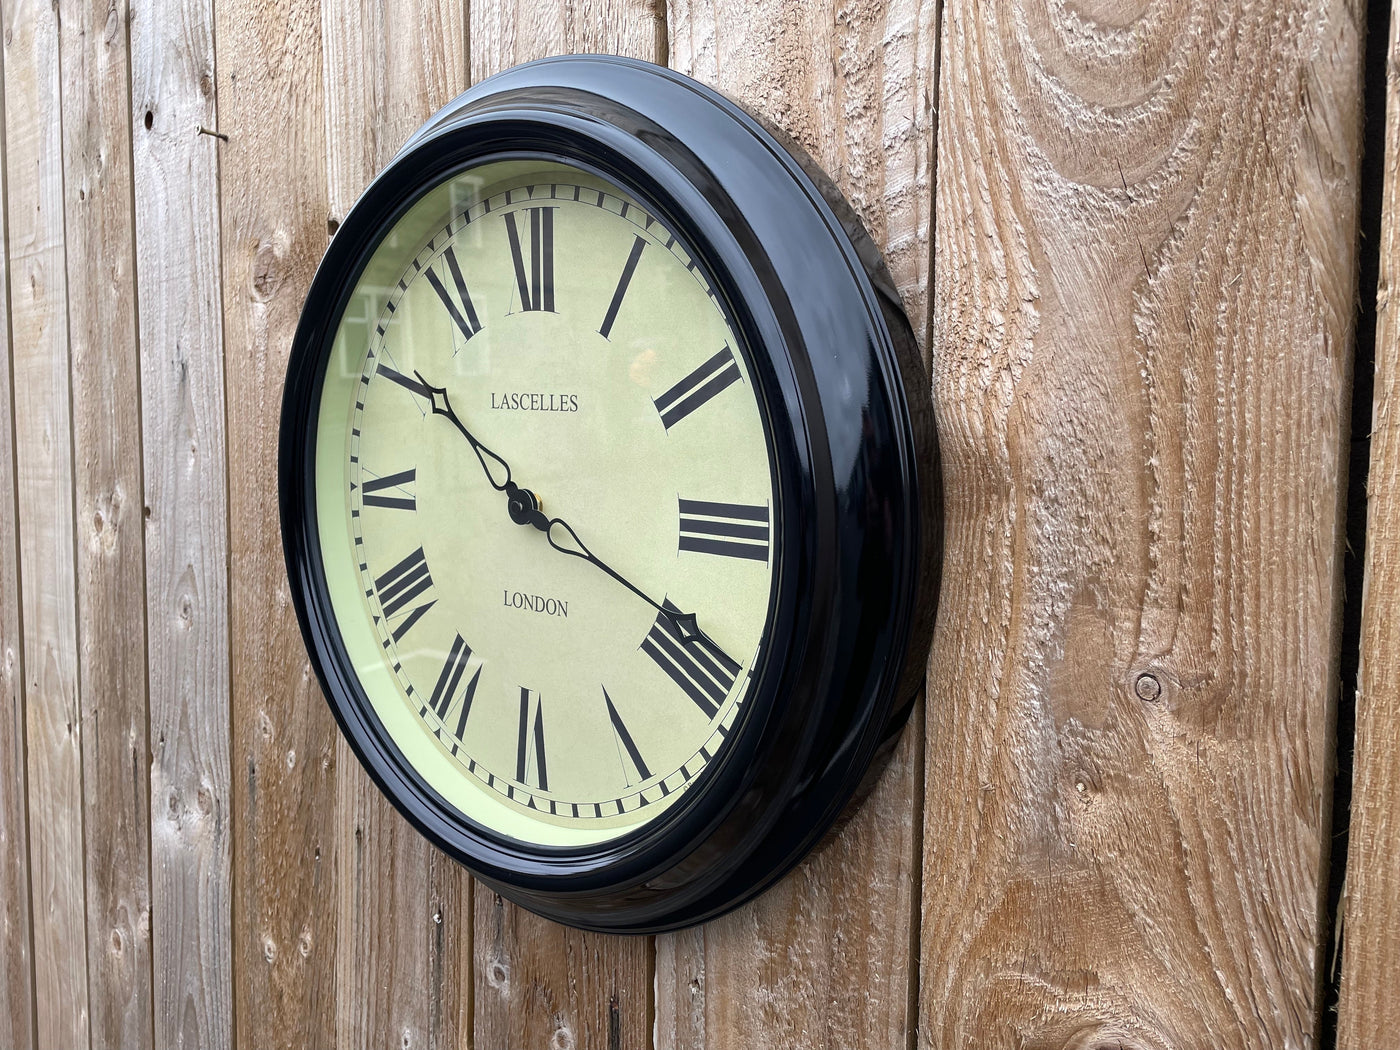 Roger Lascelles London. Station Clock Indoor & Outdoor Black - timeframedclocks